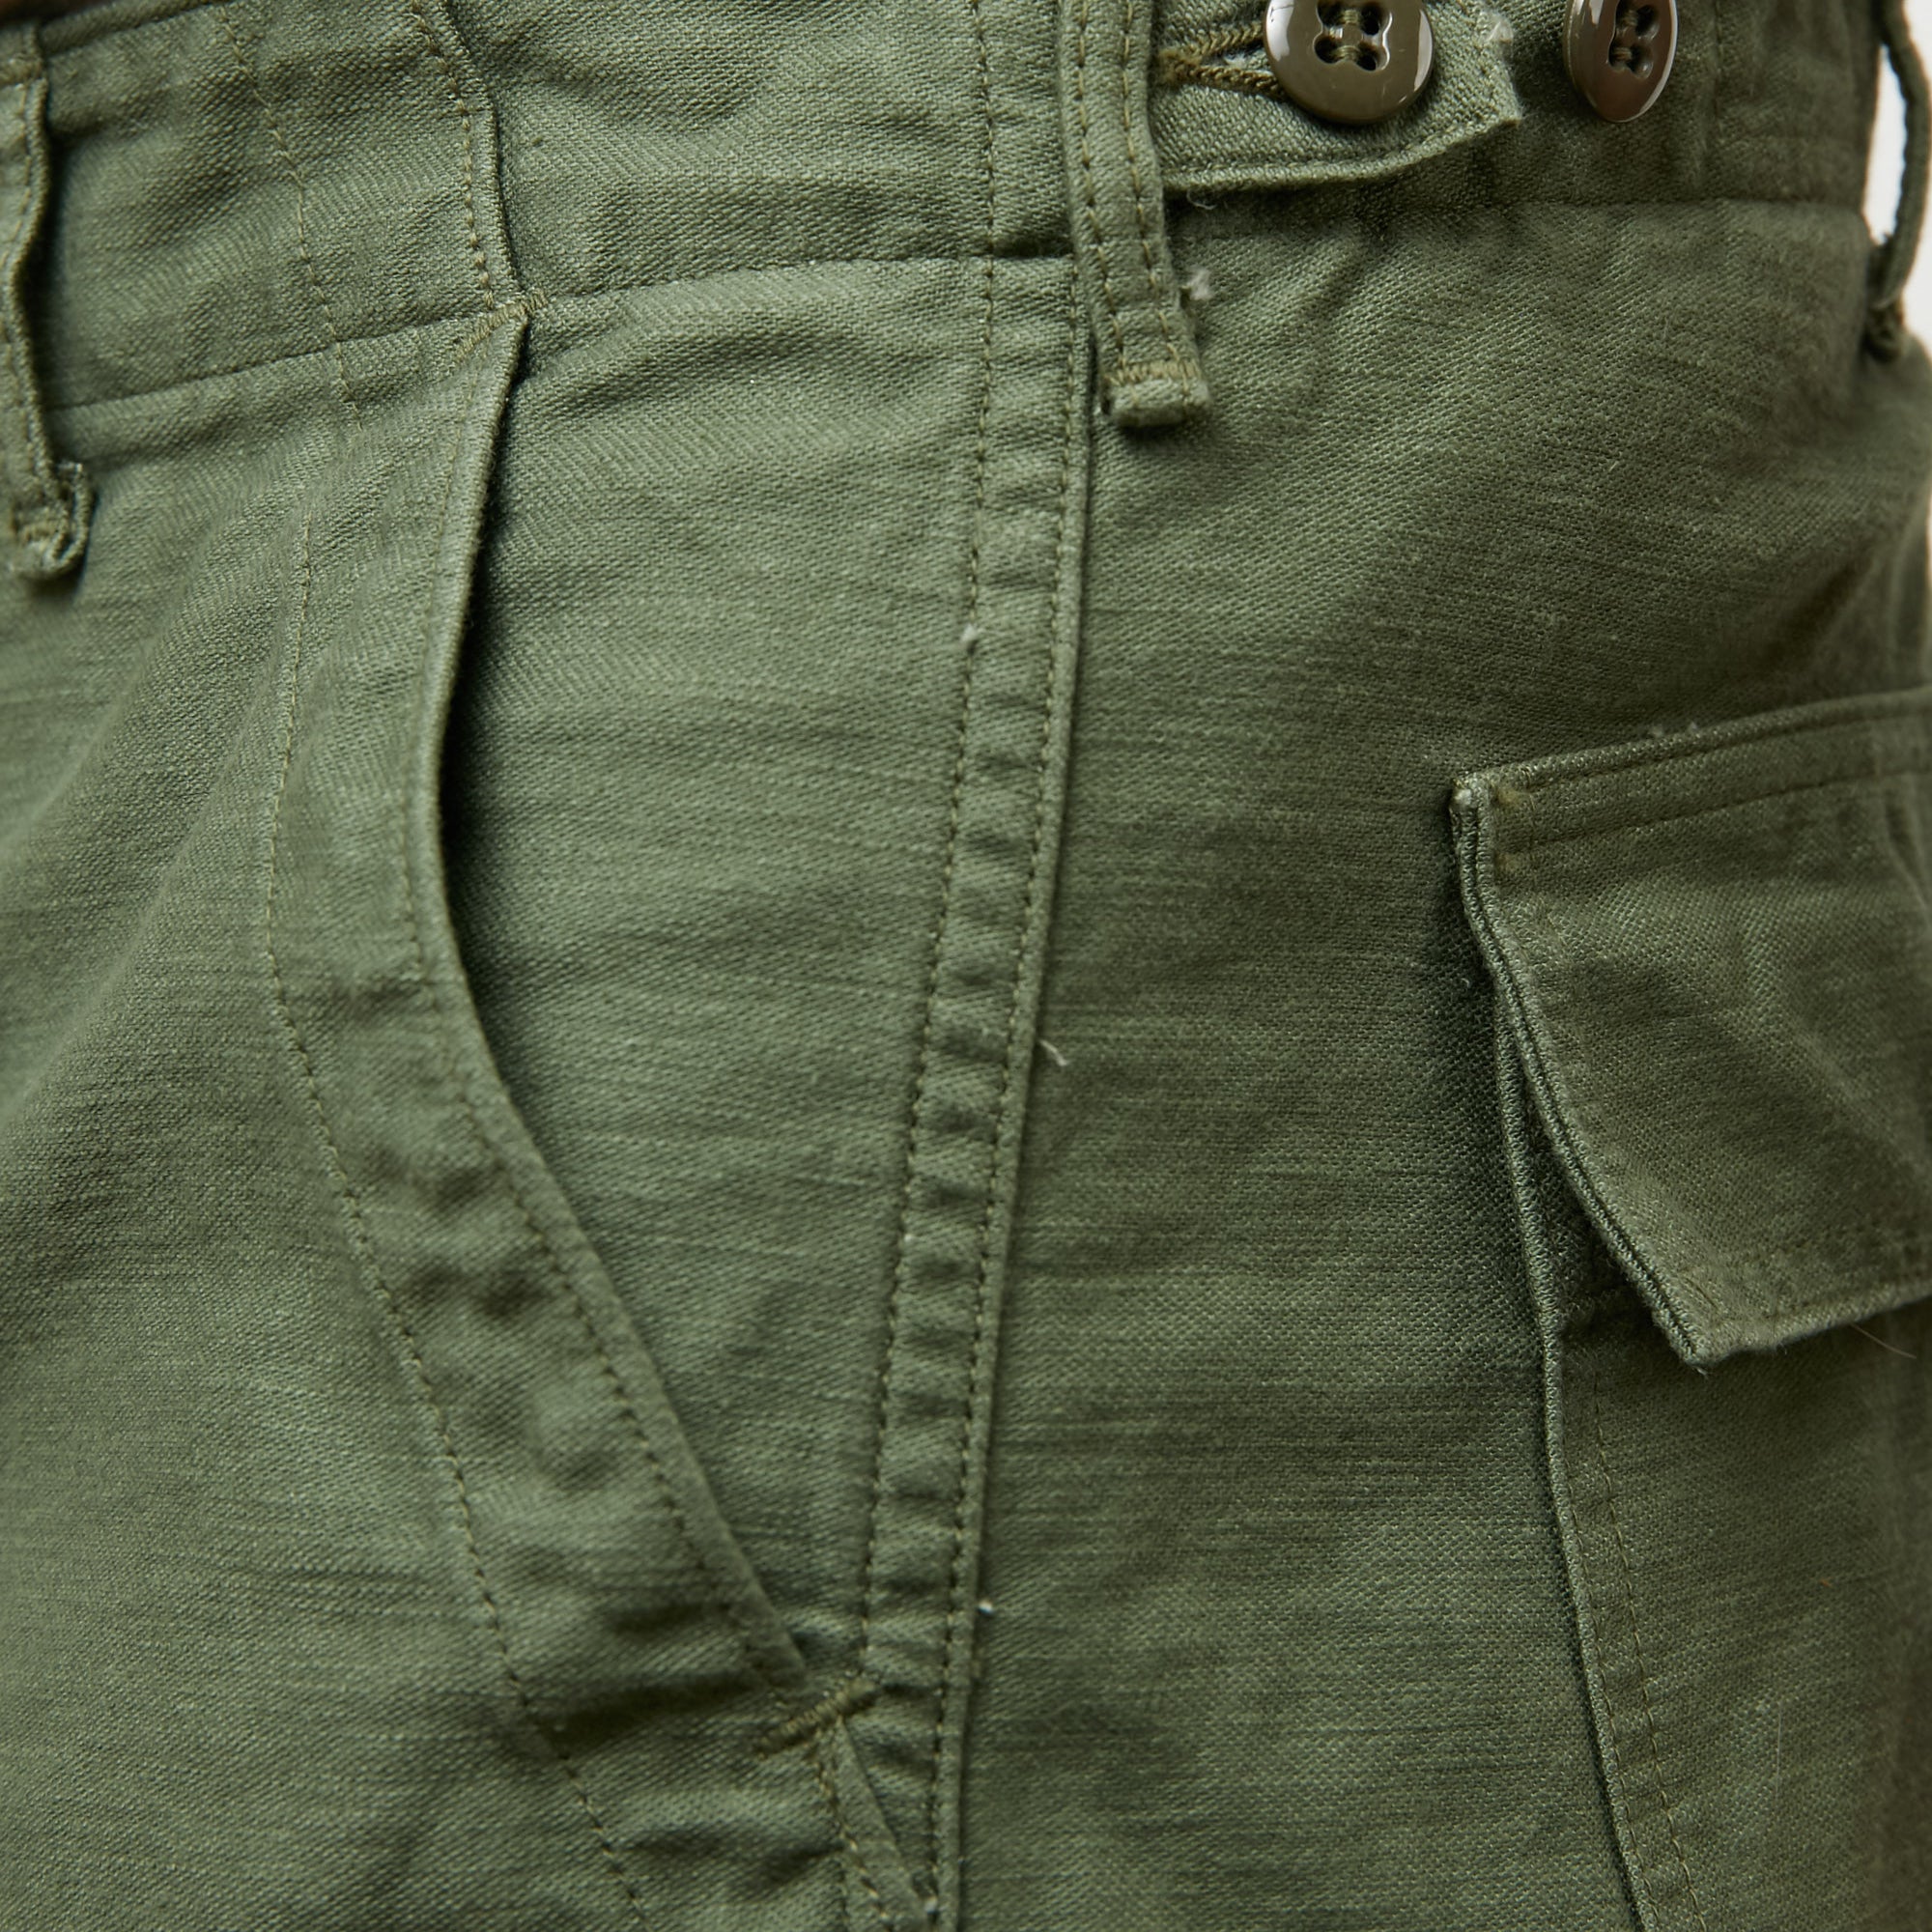 OrSlow Slim Fit Fatigue Pants - Olive - Totem Brand Co.